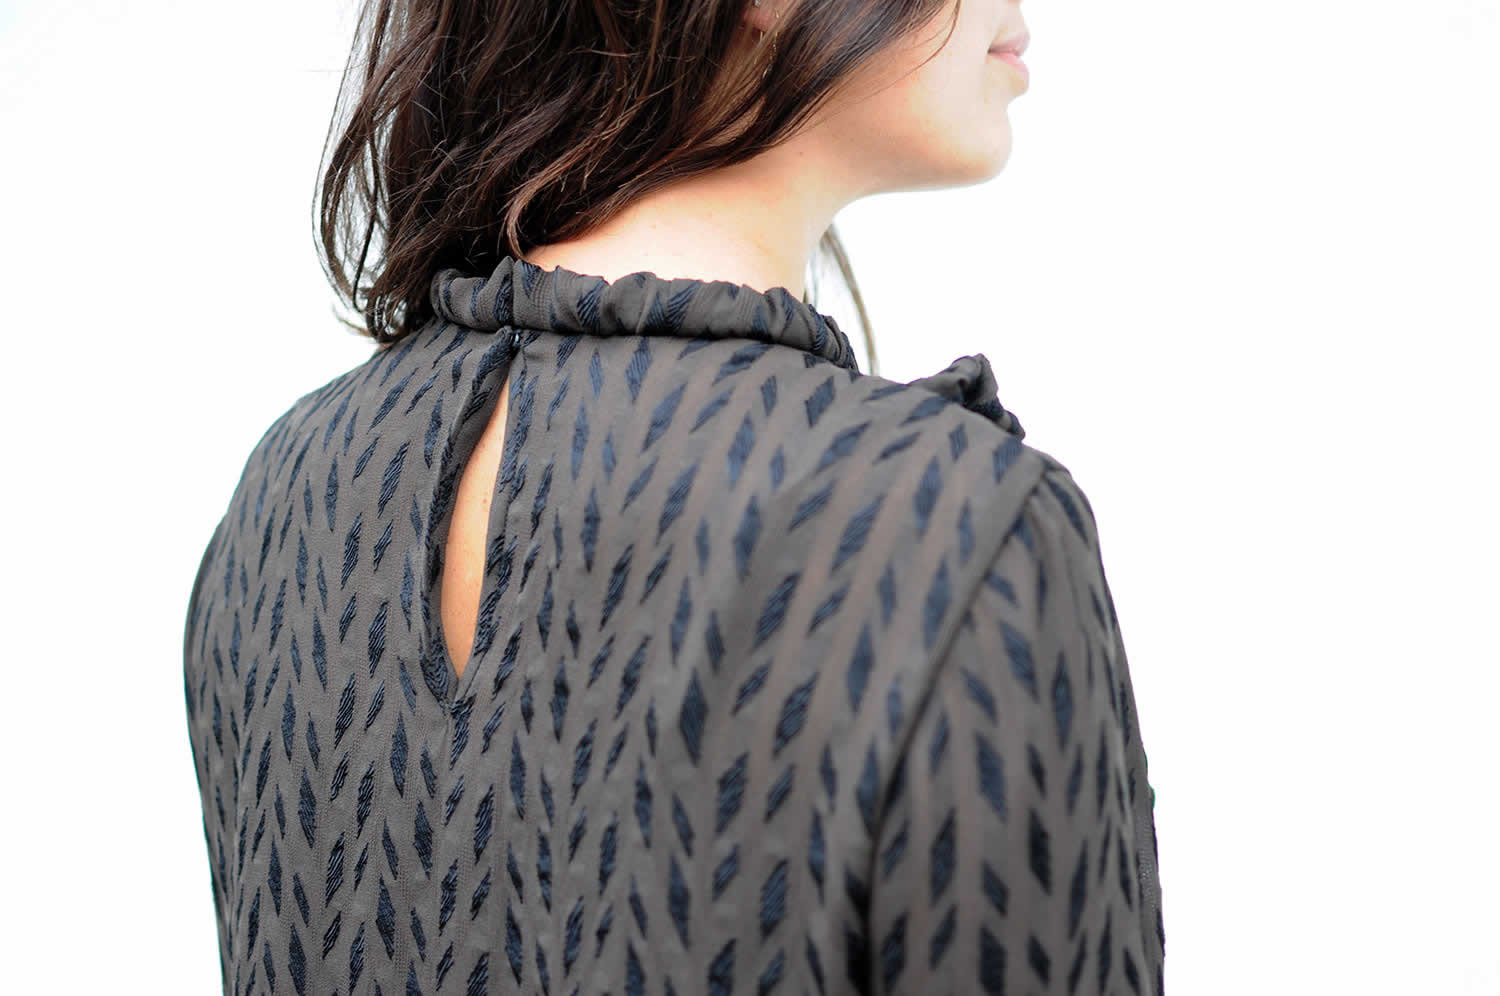 Ladulsatina - Sewing blog - Blog di cucito - Jolanda blusa by Atelier Vicolo n 6 in silk viscose blend - Back details